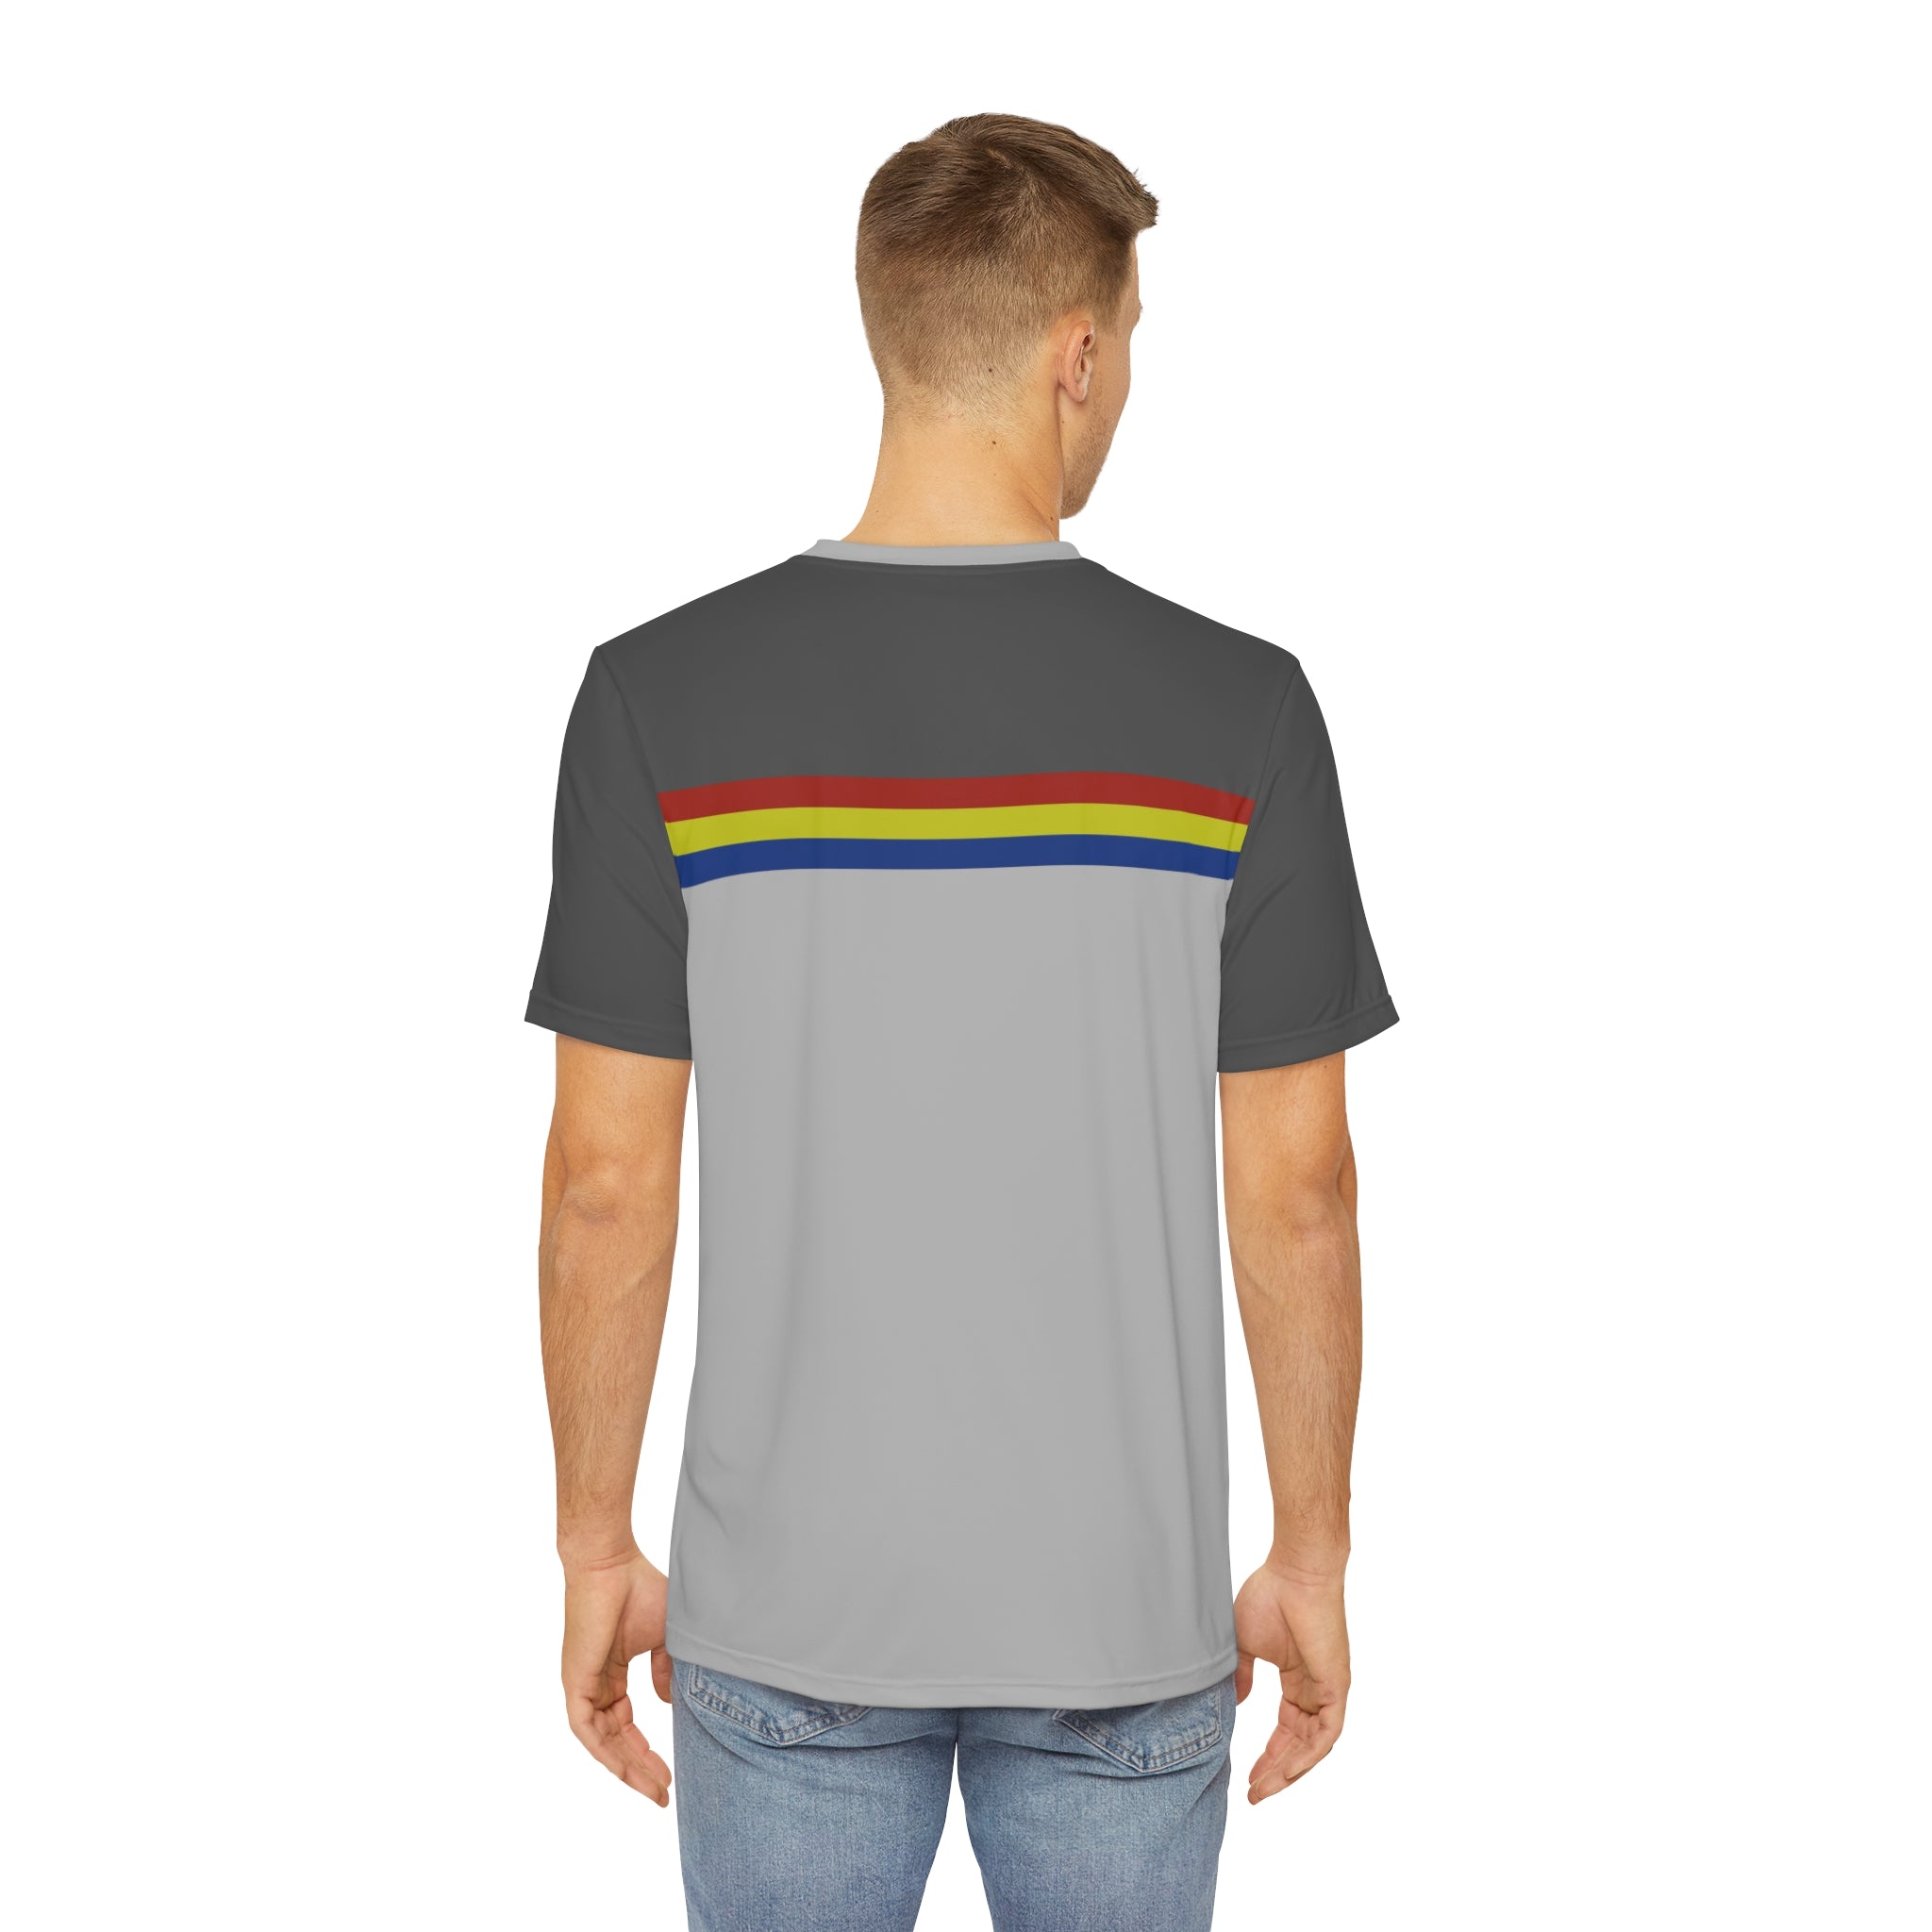 Wesley Crusher Uniform Tribute T-Shirt - TNG